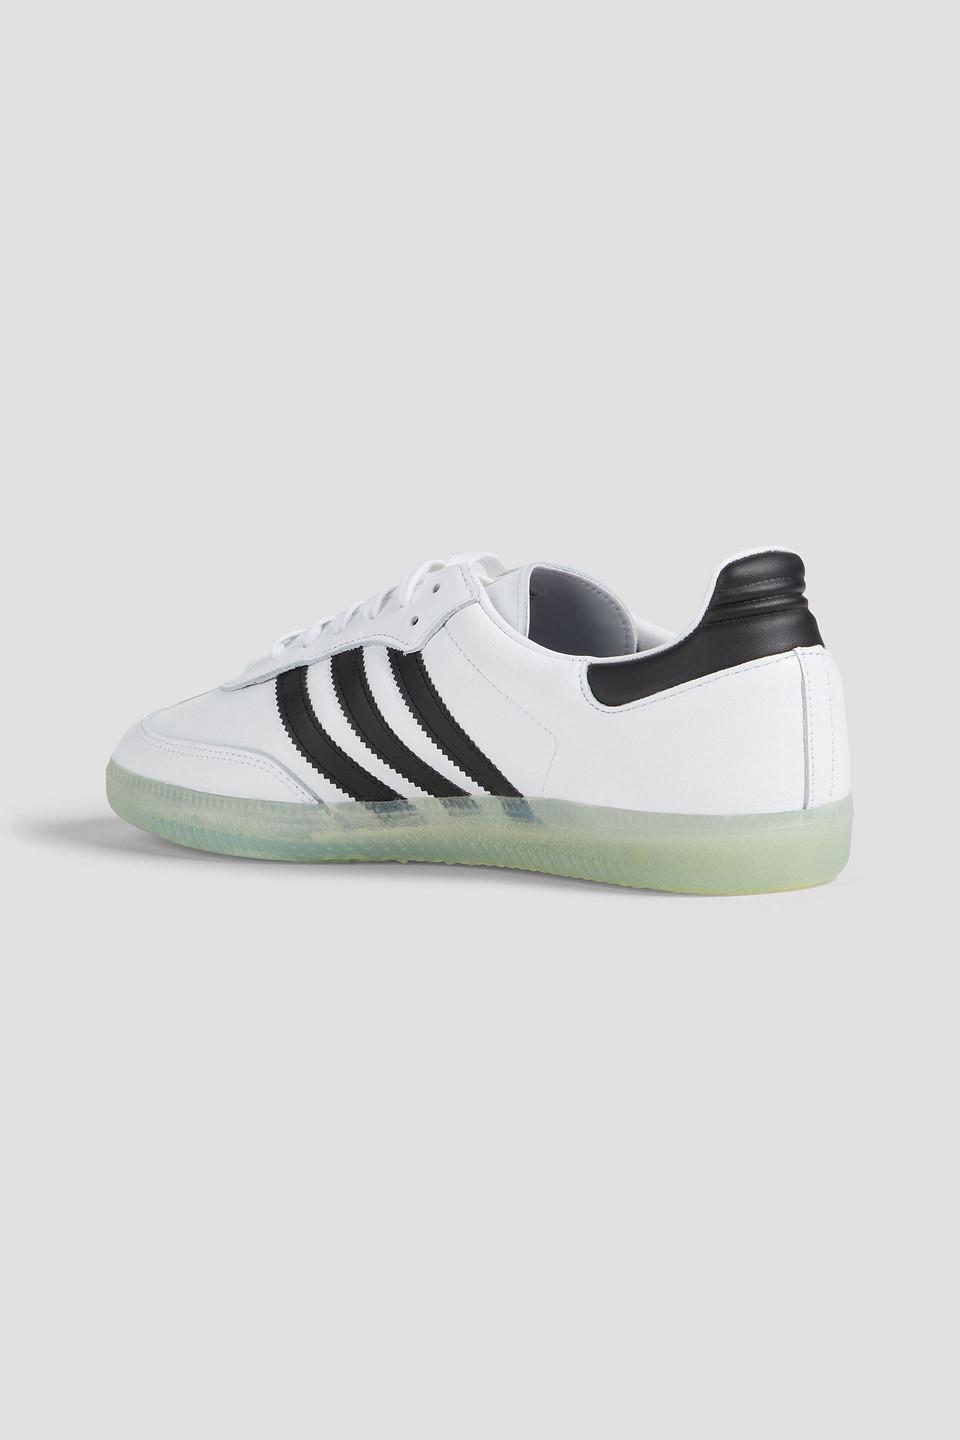 Adidas Pharrell Williams Human Race Sneakers - Size 12.5 | eBay